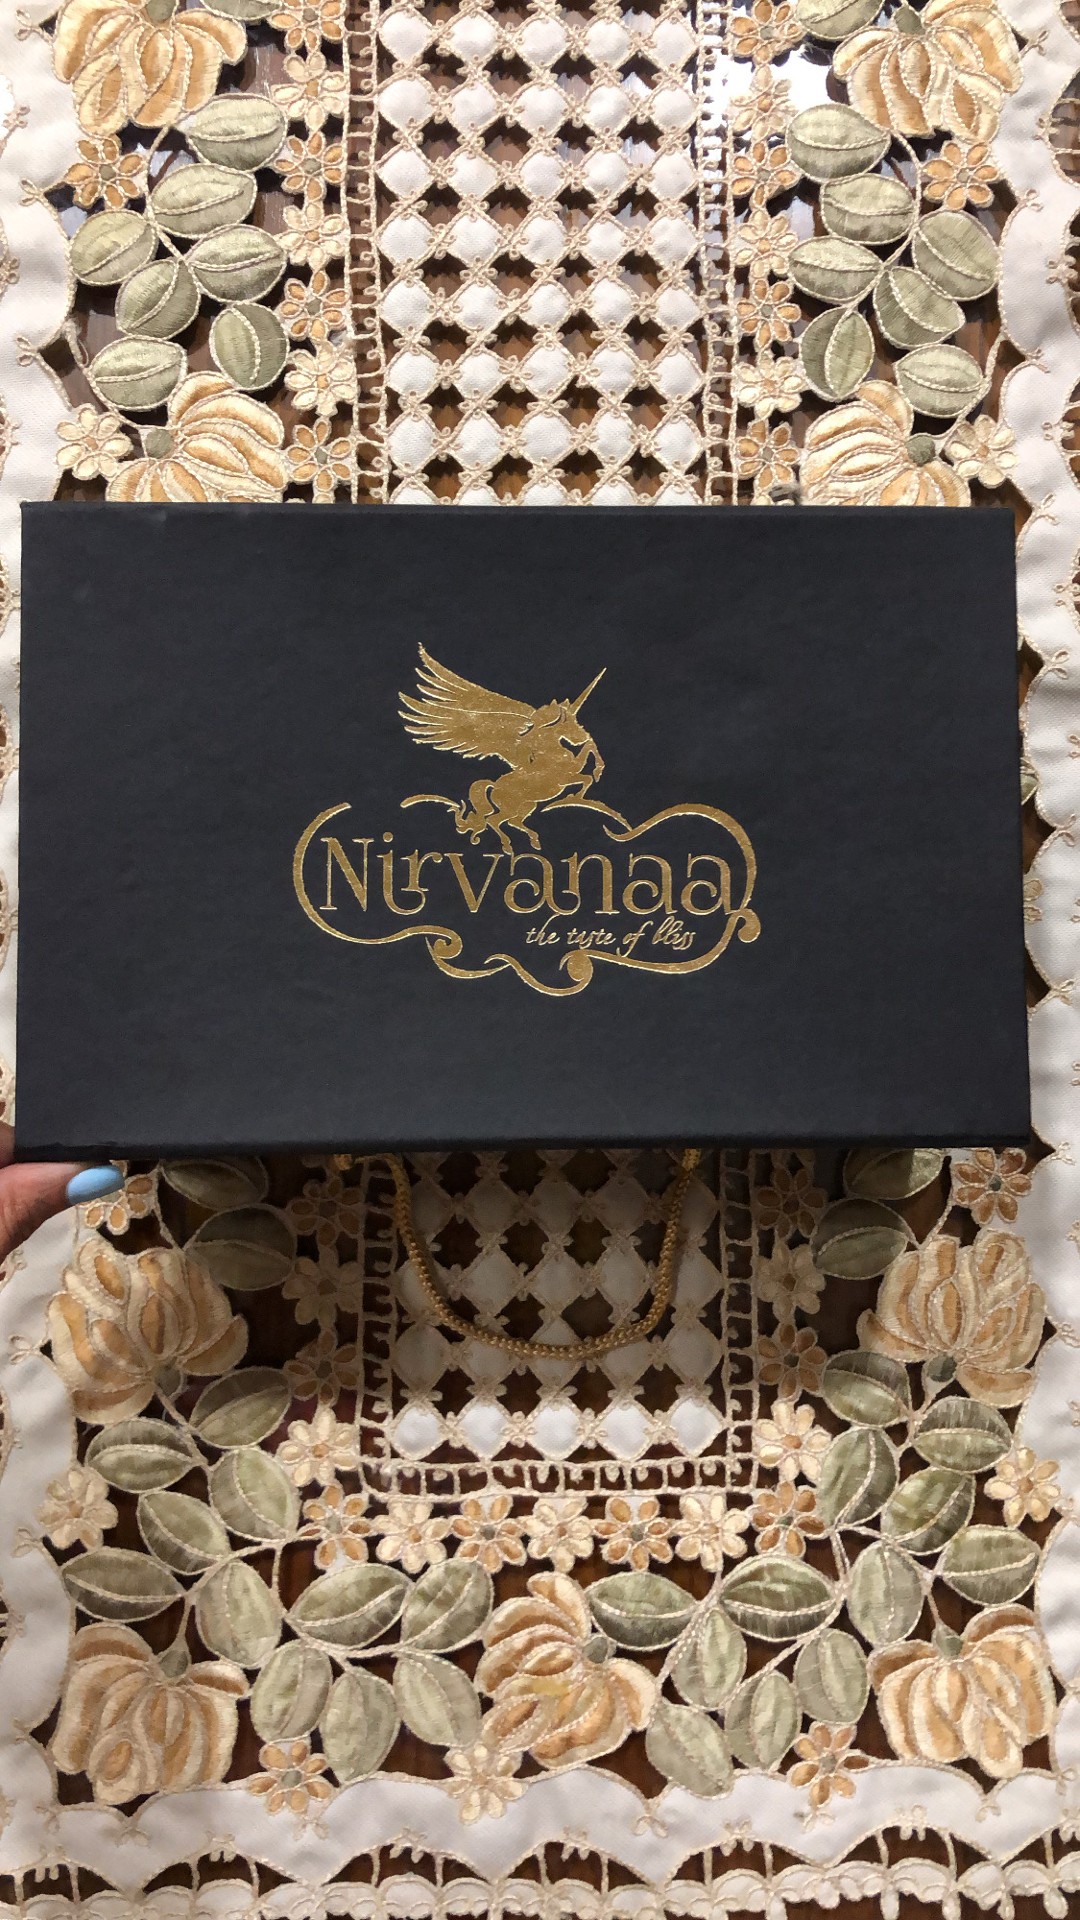 Nirvanna Chocolates